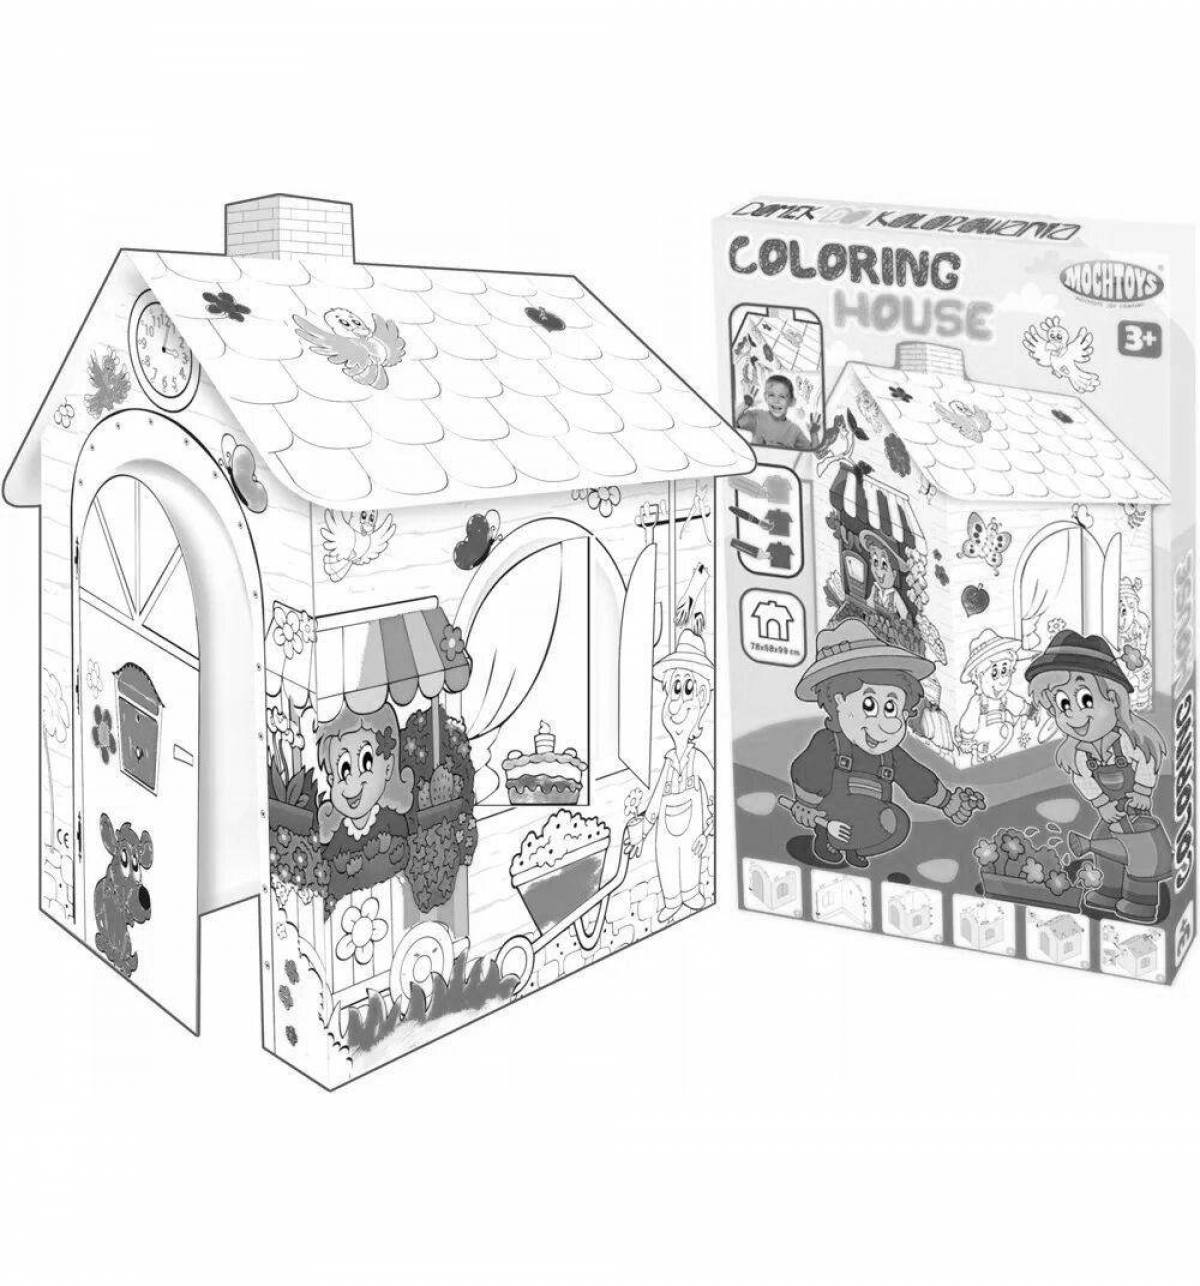 Cardboard playhouse #5